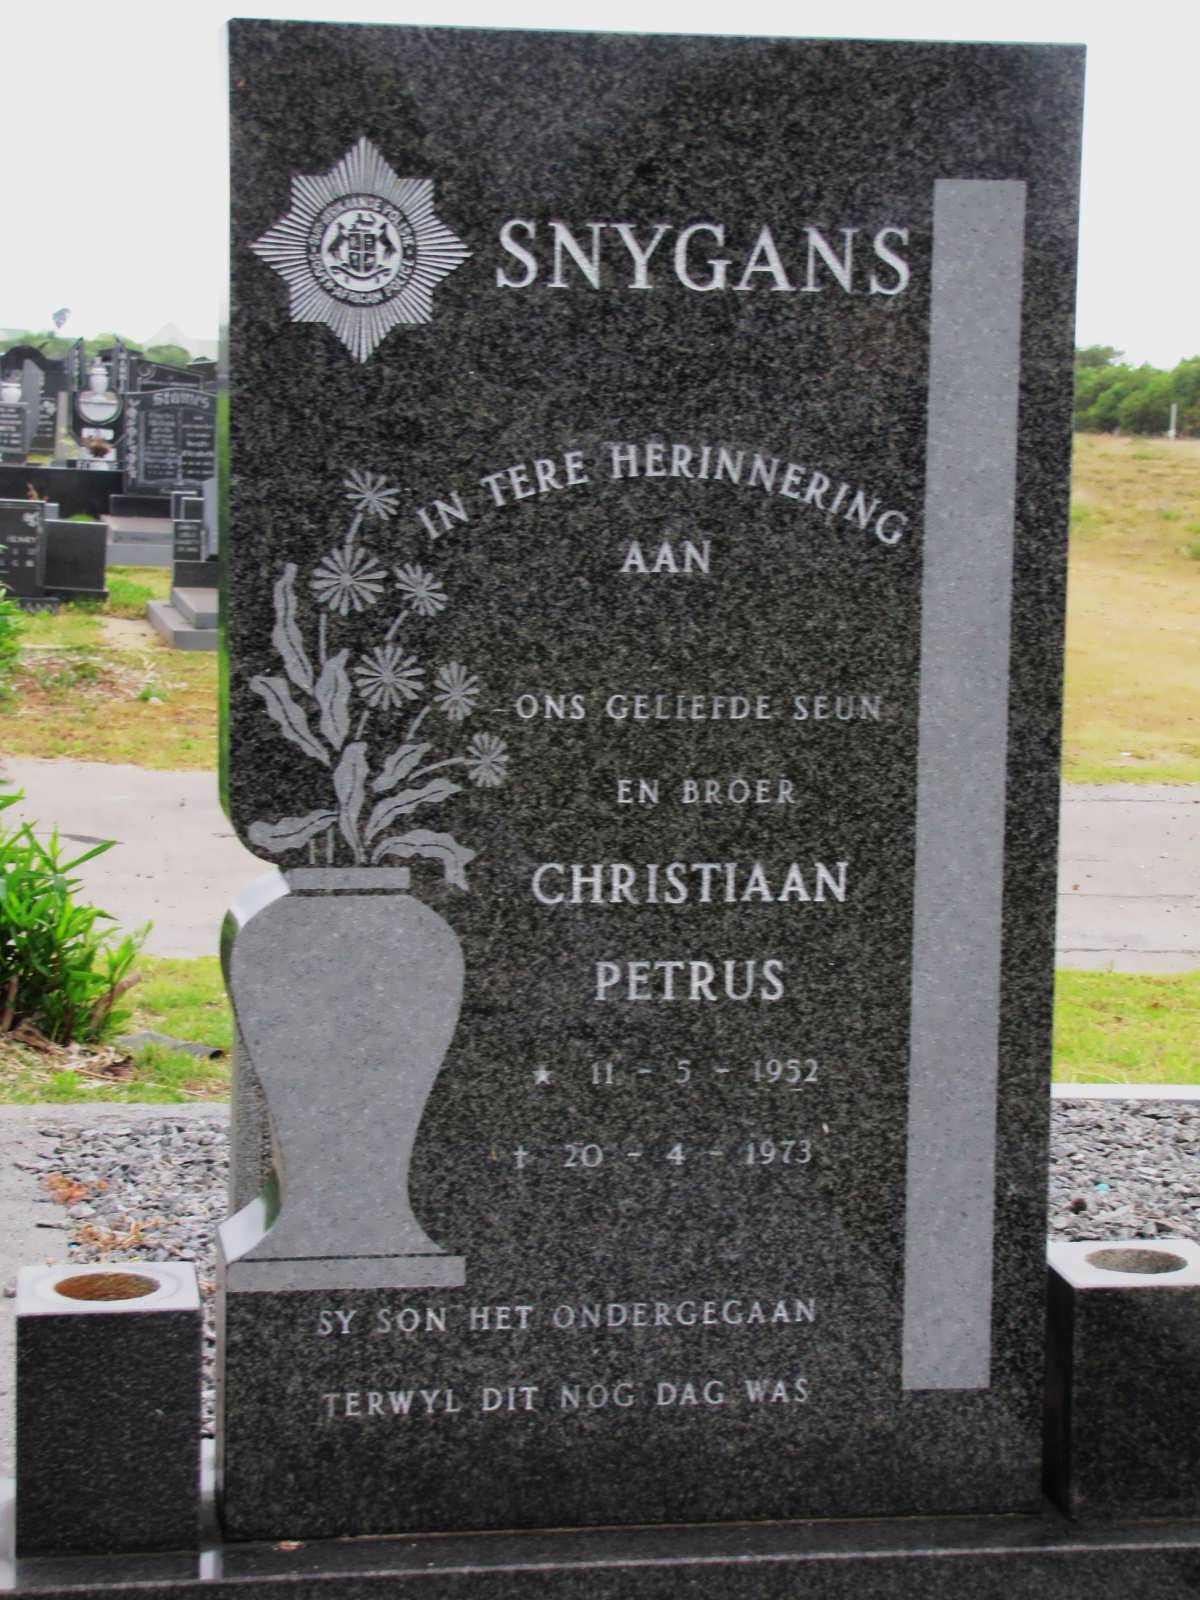 SNYGANS Christiaan Petrus 1952-1973